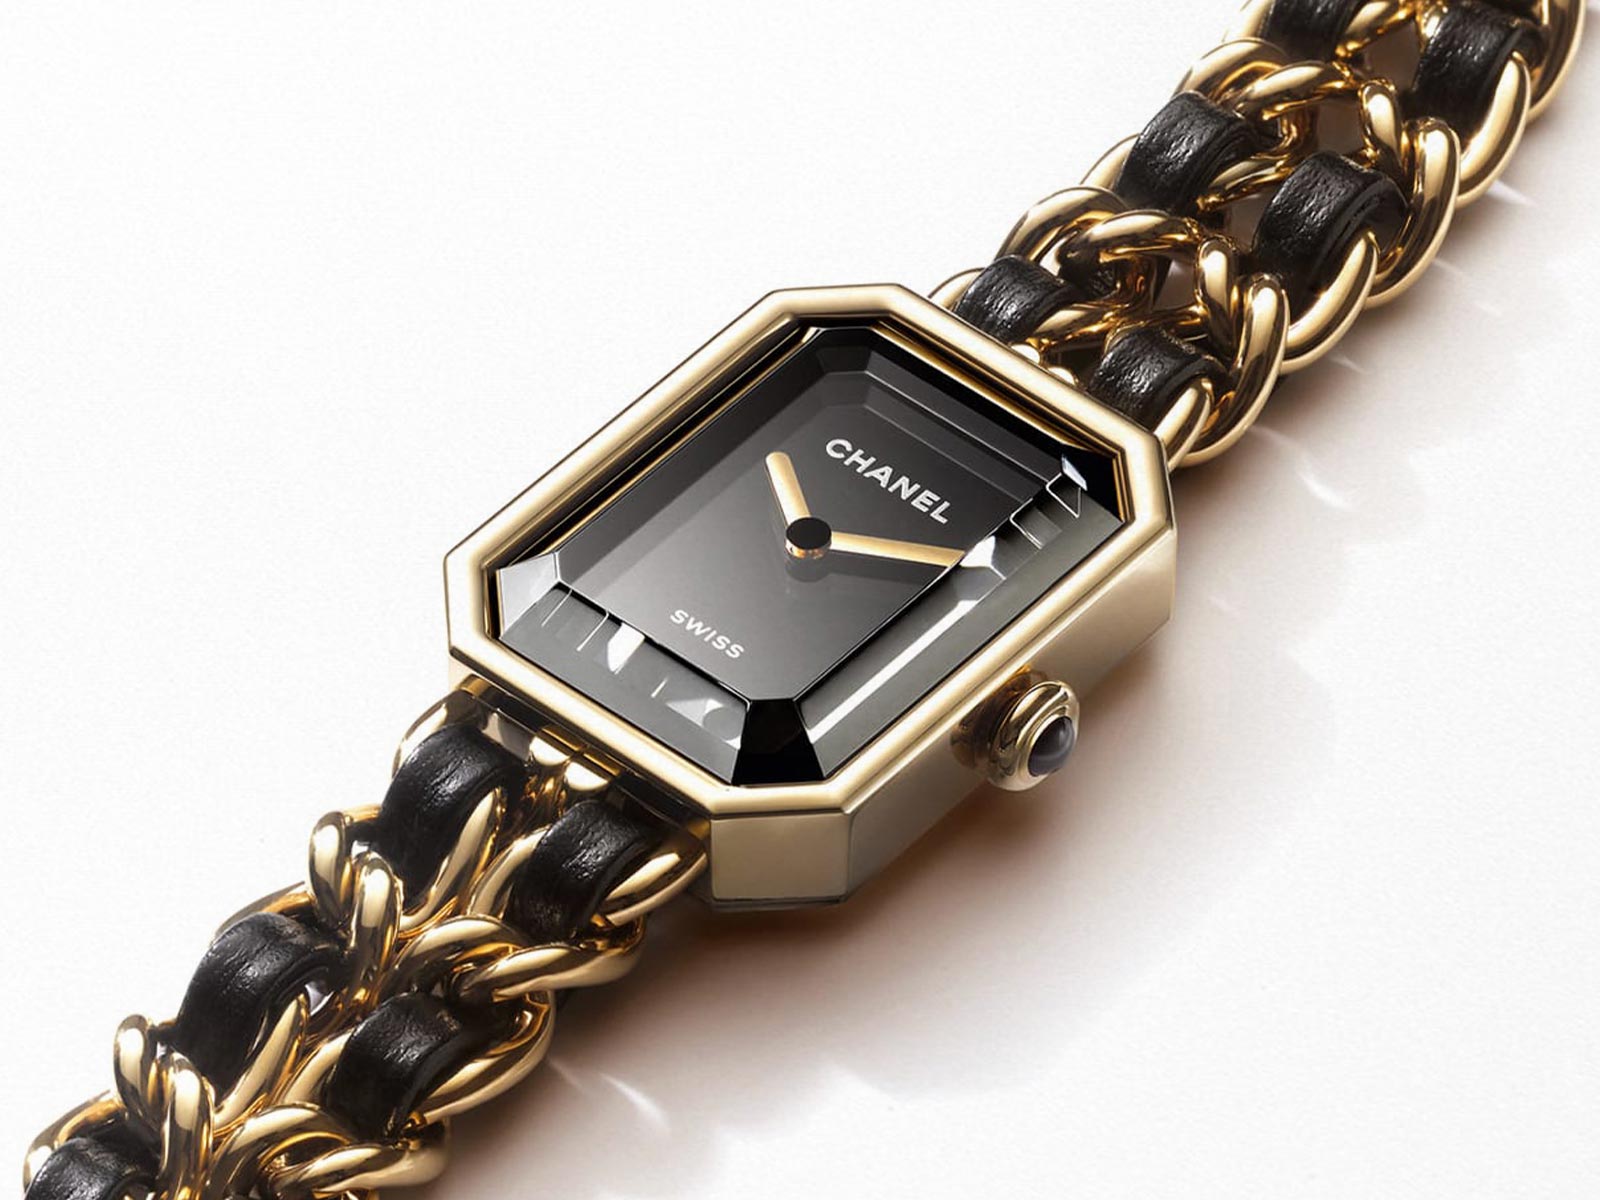 The iconic Première de Chanel watch is back